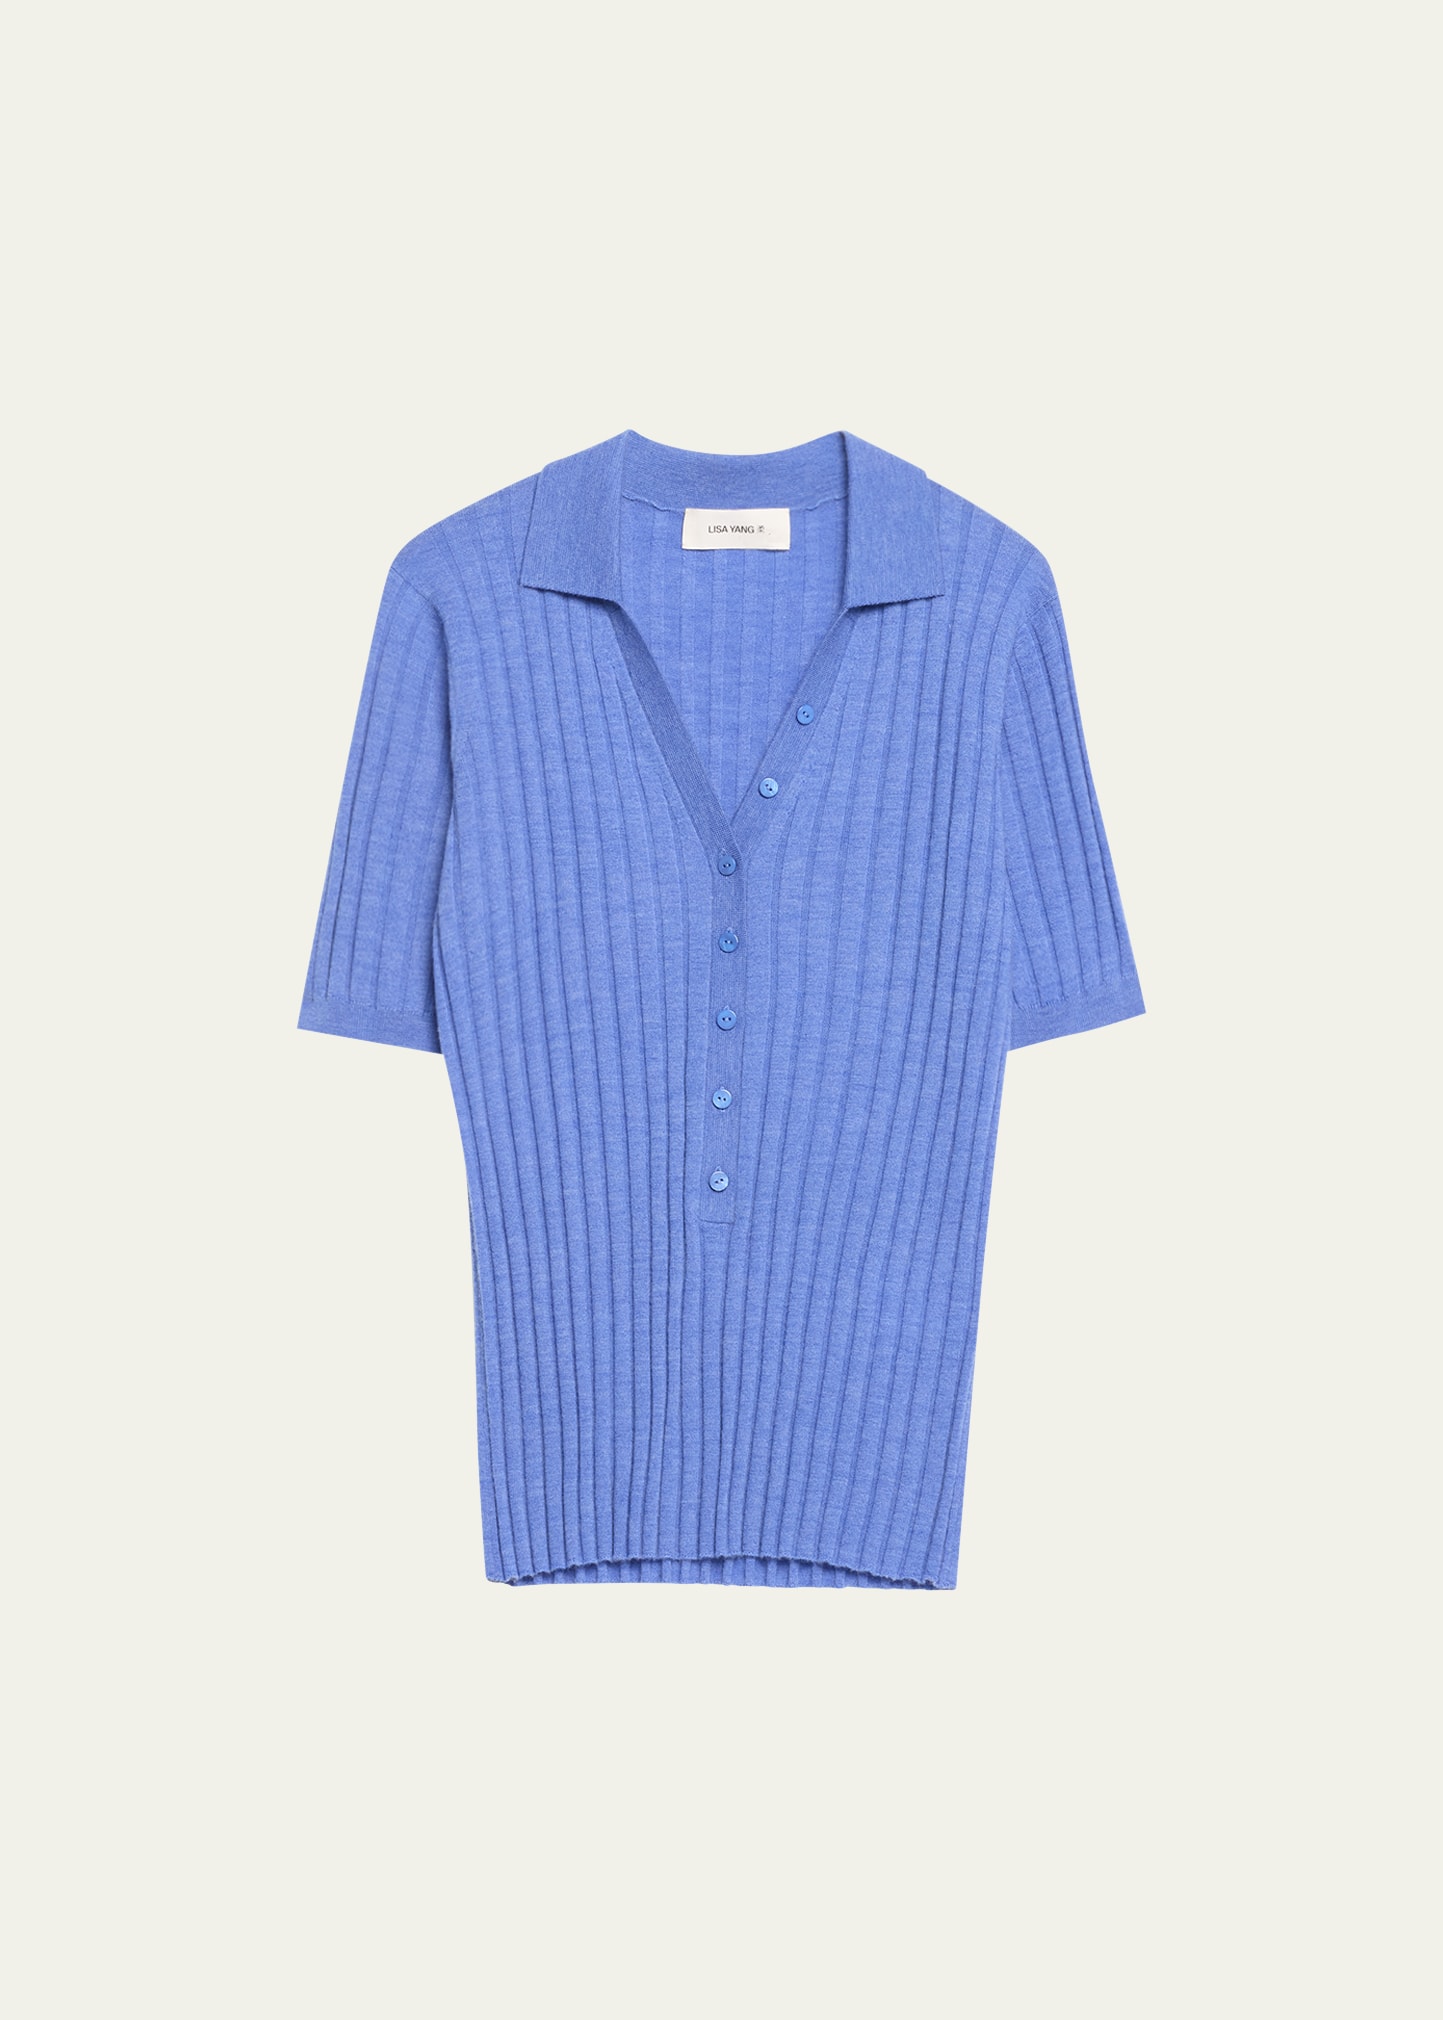 Cashmere V-Neck Short-Sleeve Rib-Knit Top